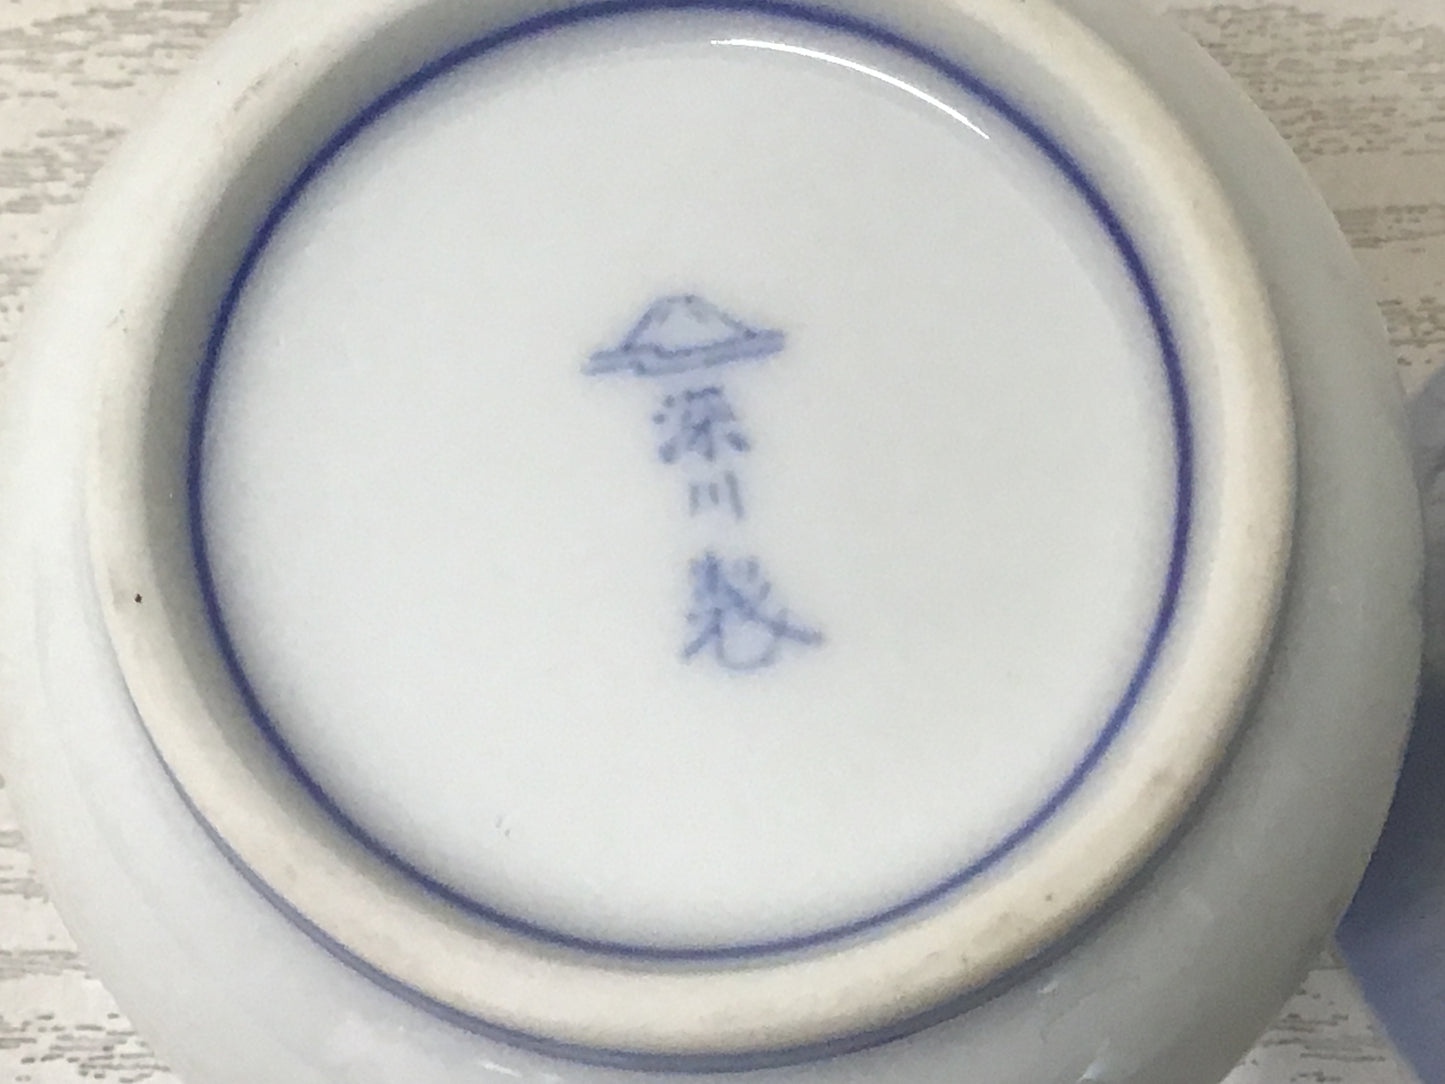 Y2003 YUNOMI Arita-ware Fukagawa Porcelain signed box Japanese pottery tea cup